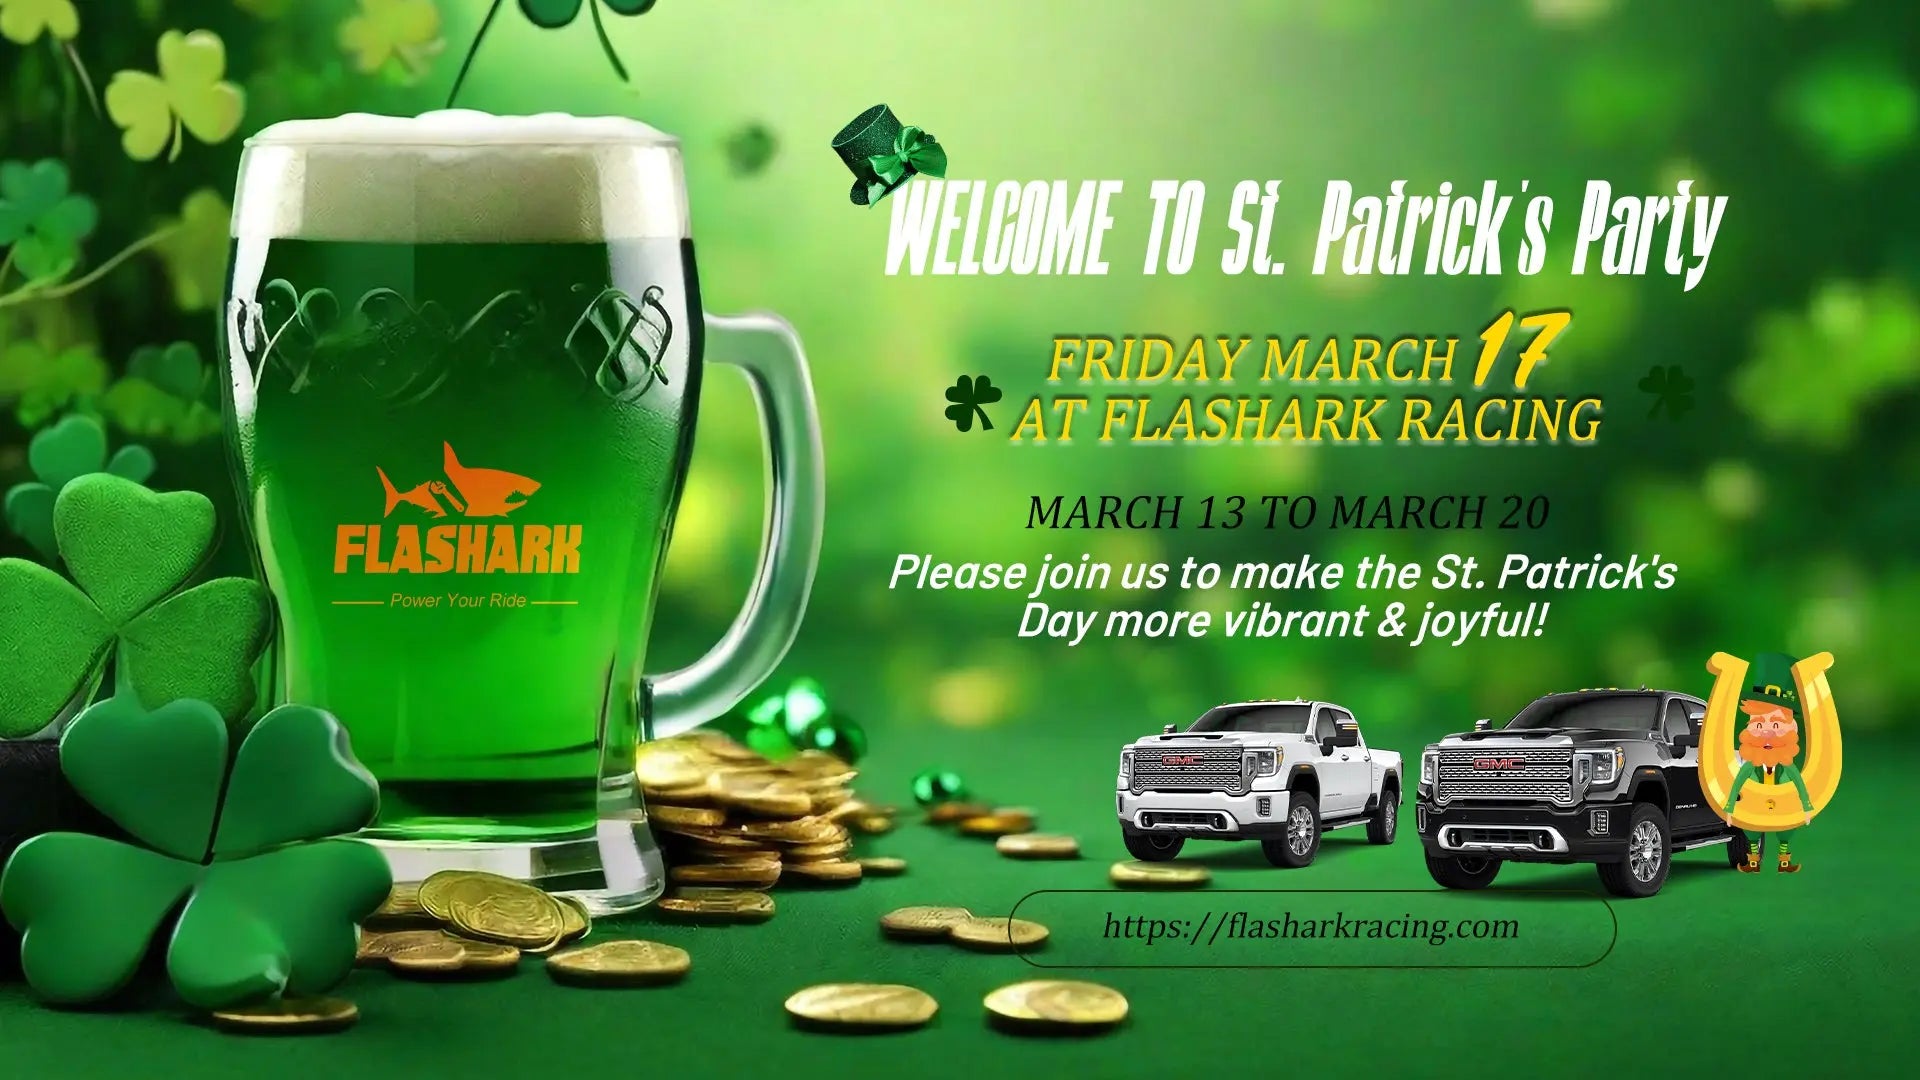 Shamrocks, Lucky, St. Patrick's Day! Flashark Party